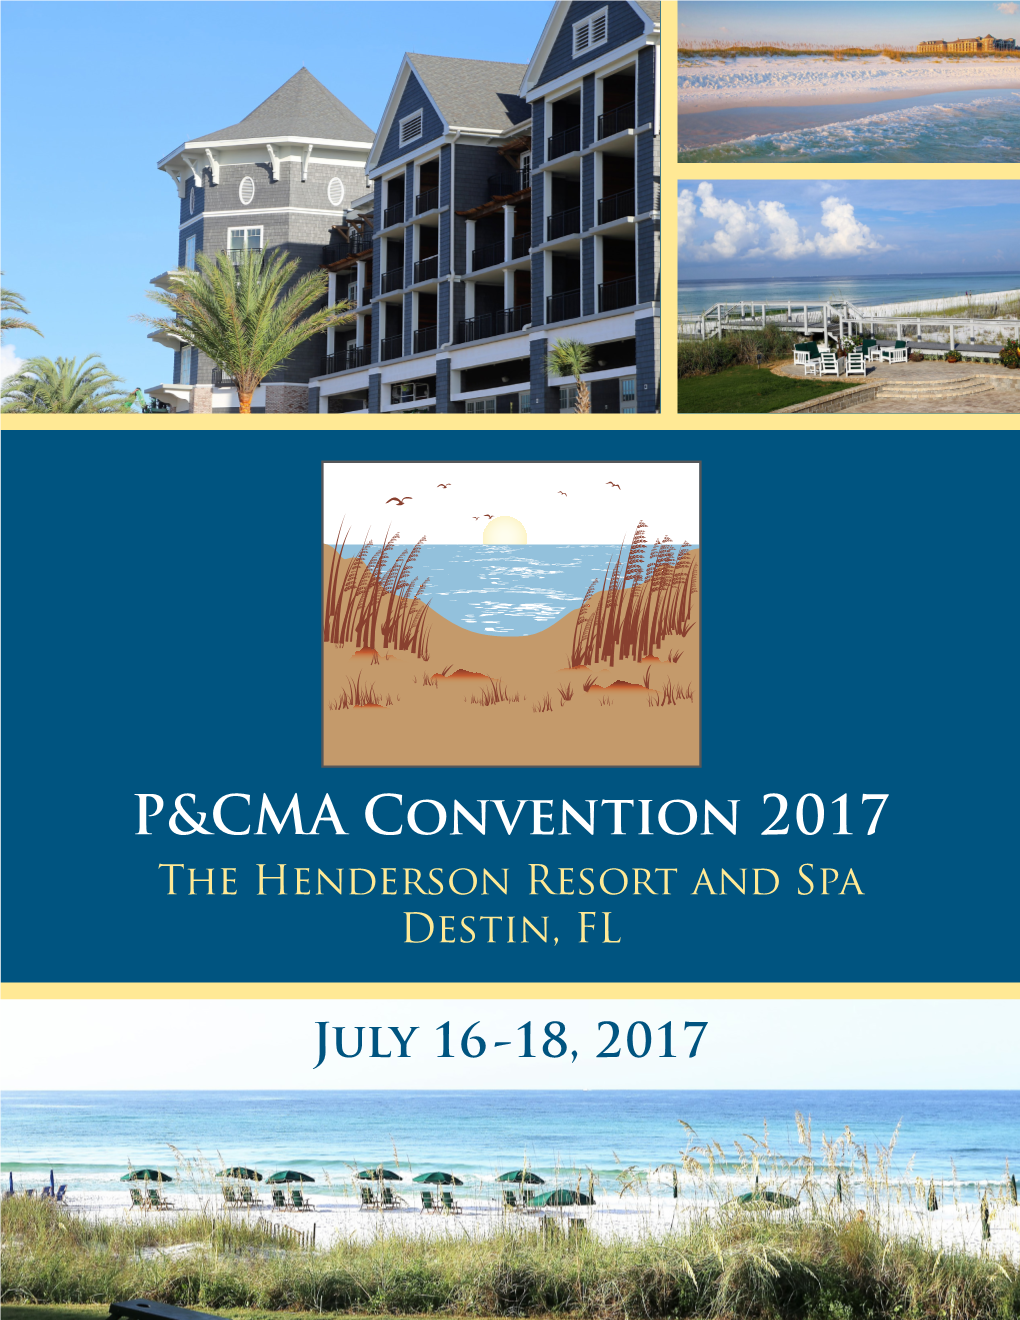 P&CMA Convention 2017